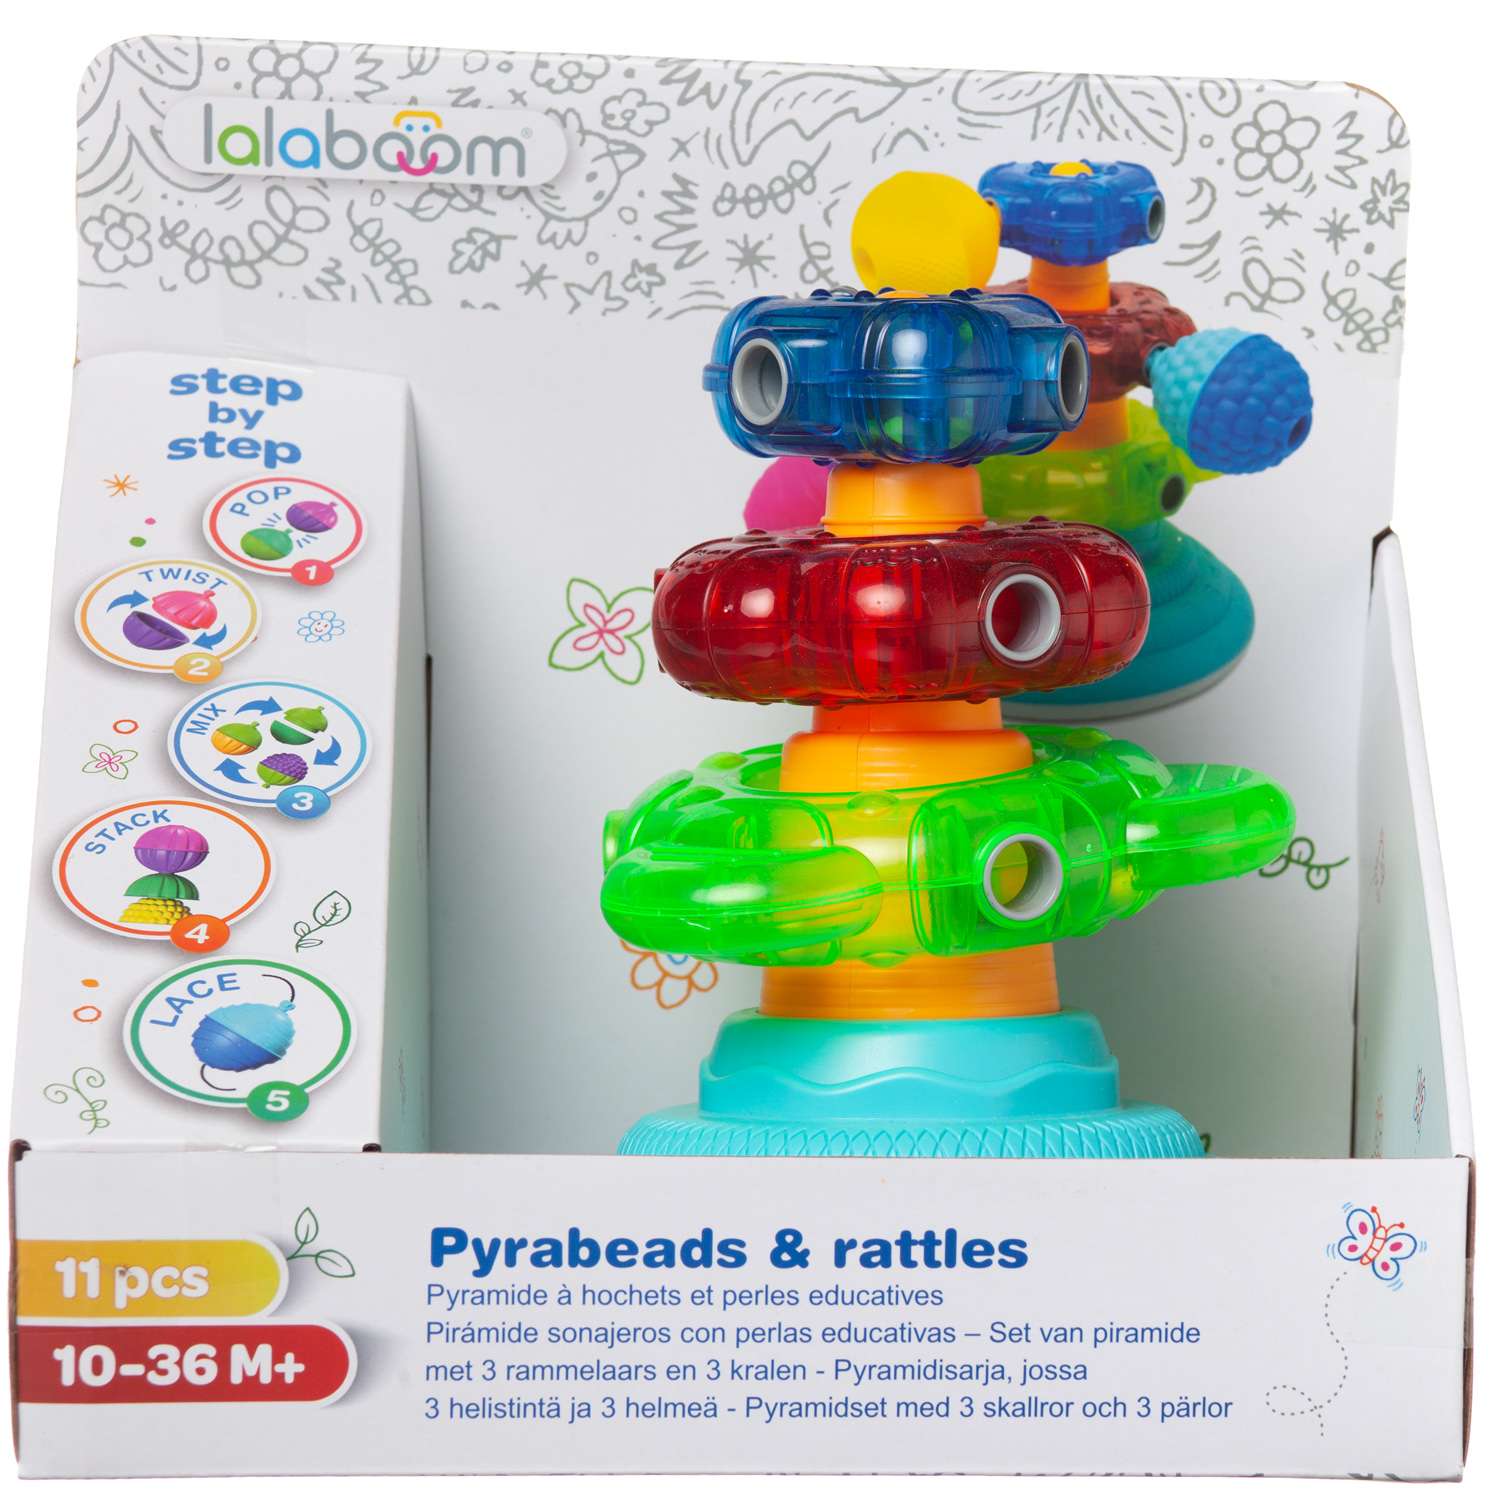 Развивающая игрушка LALABOOM для малыша пирамида с аксессуарами 11 предметов - фото 2